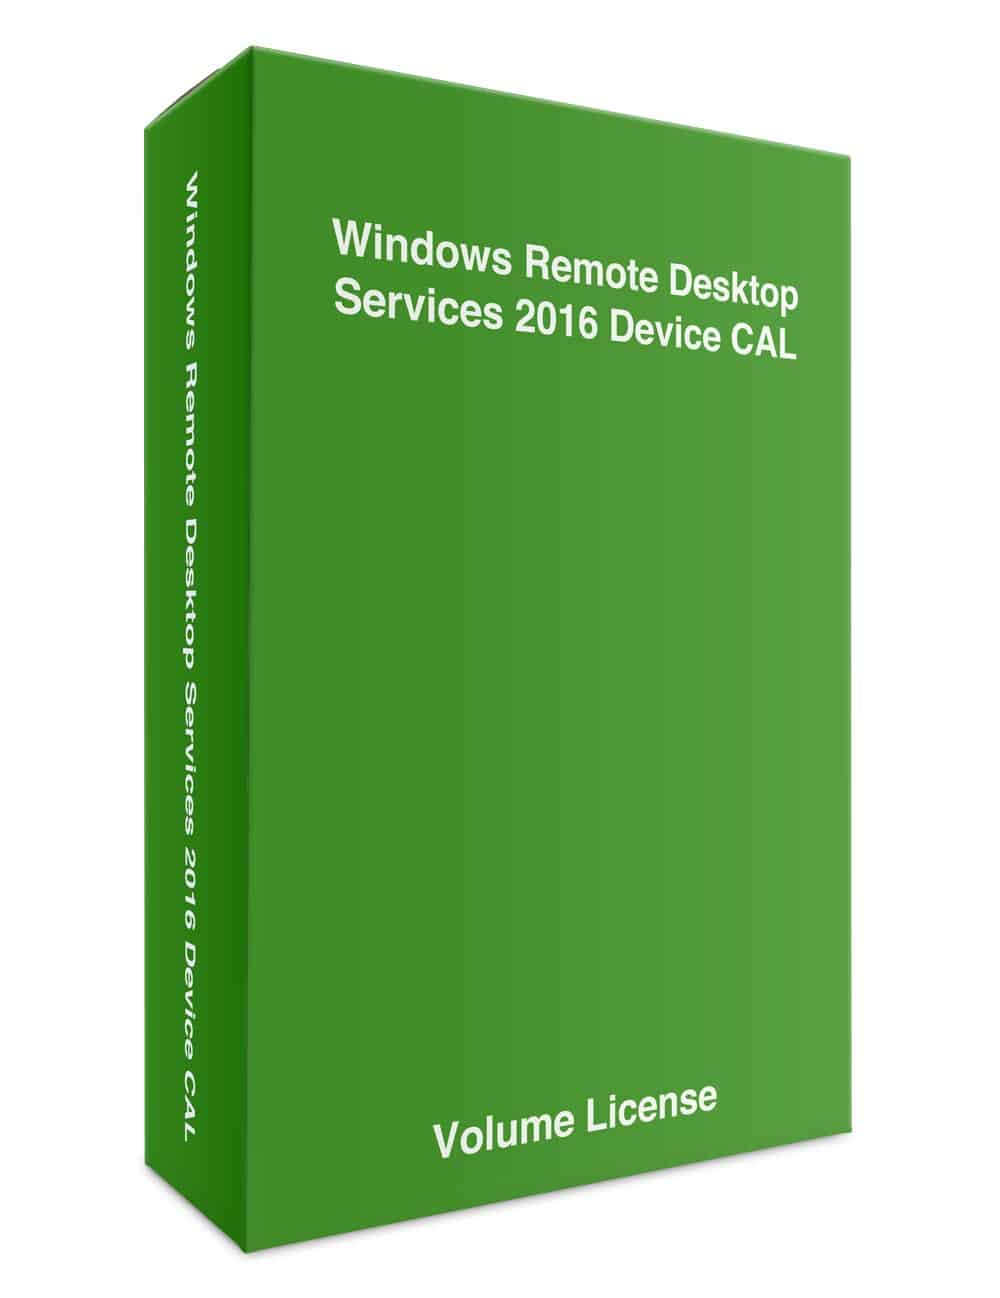 Windows Remote Desktop Services 2016 Device CAL